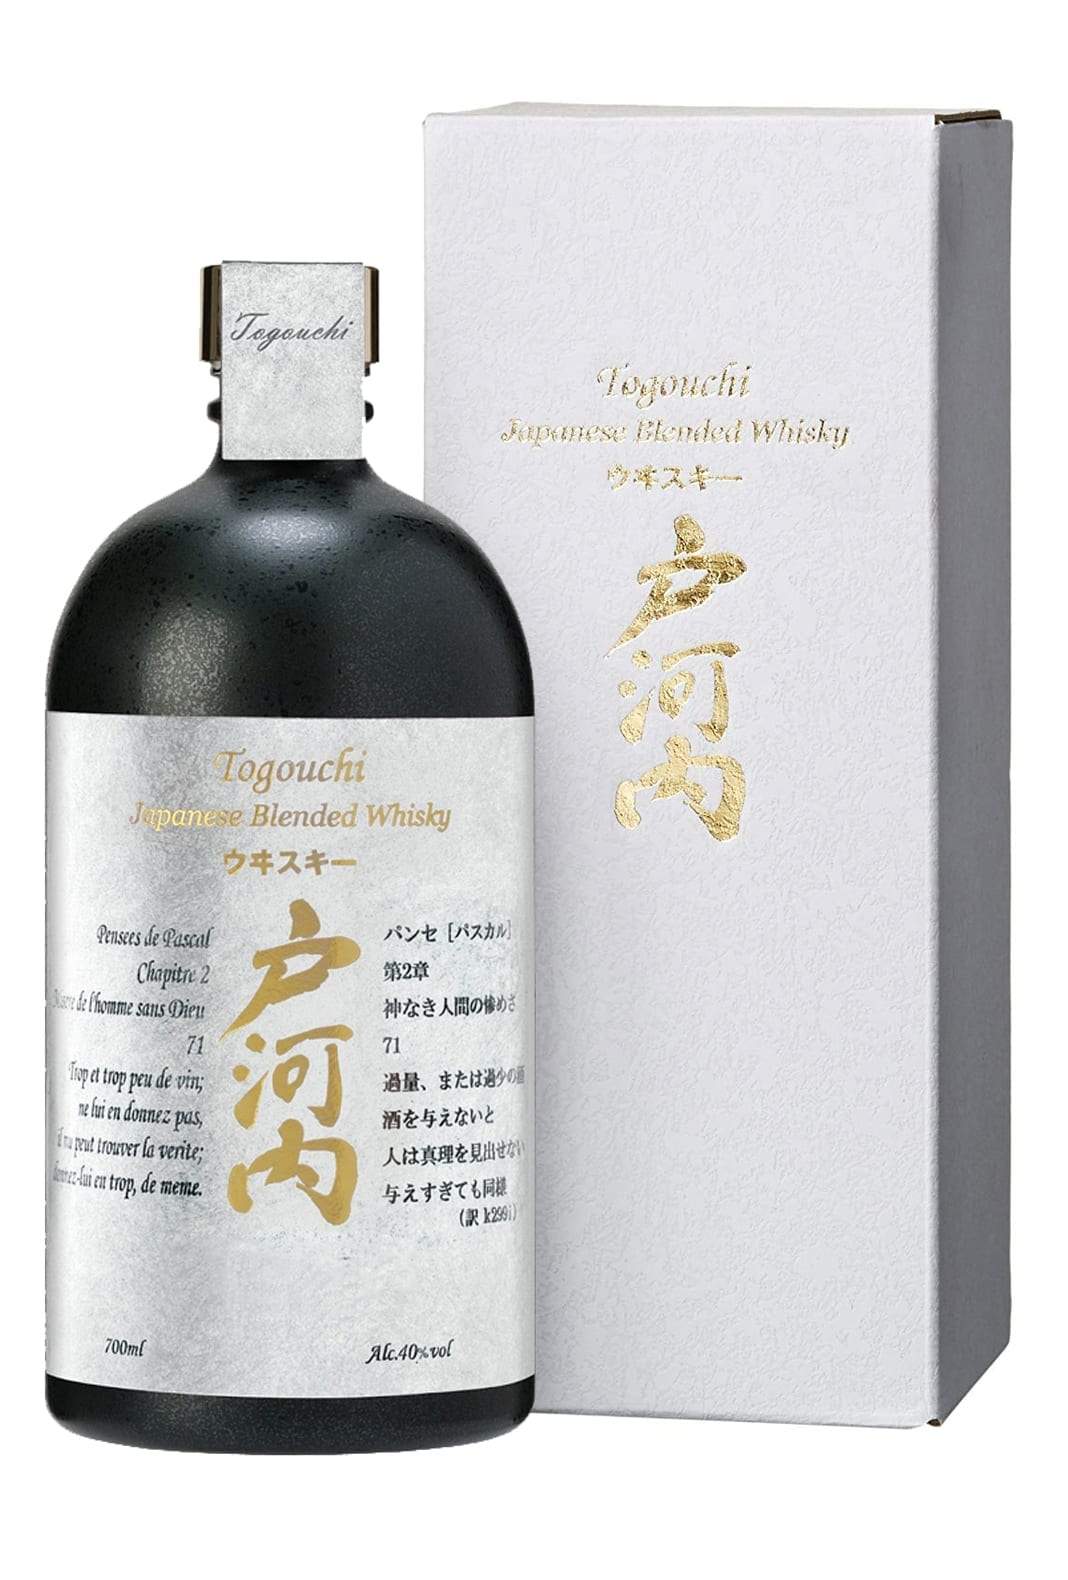 Togouchi Premium Japanese Whisky 40% 700ml | Whiskey | Shop online at Spirits of France